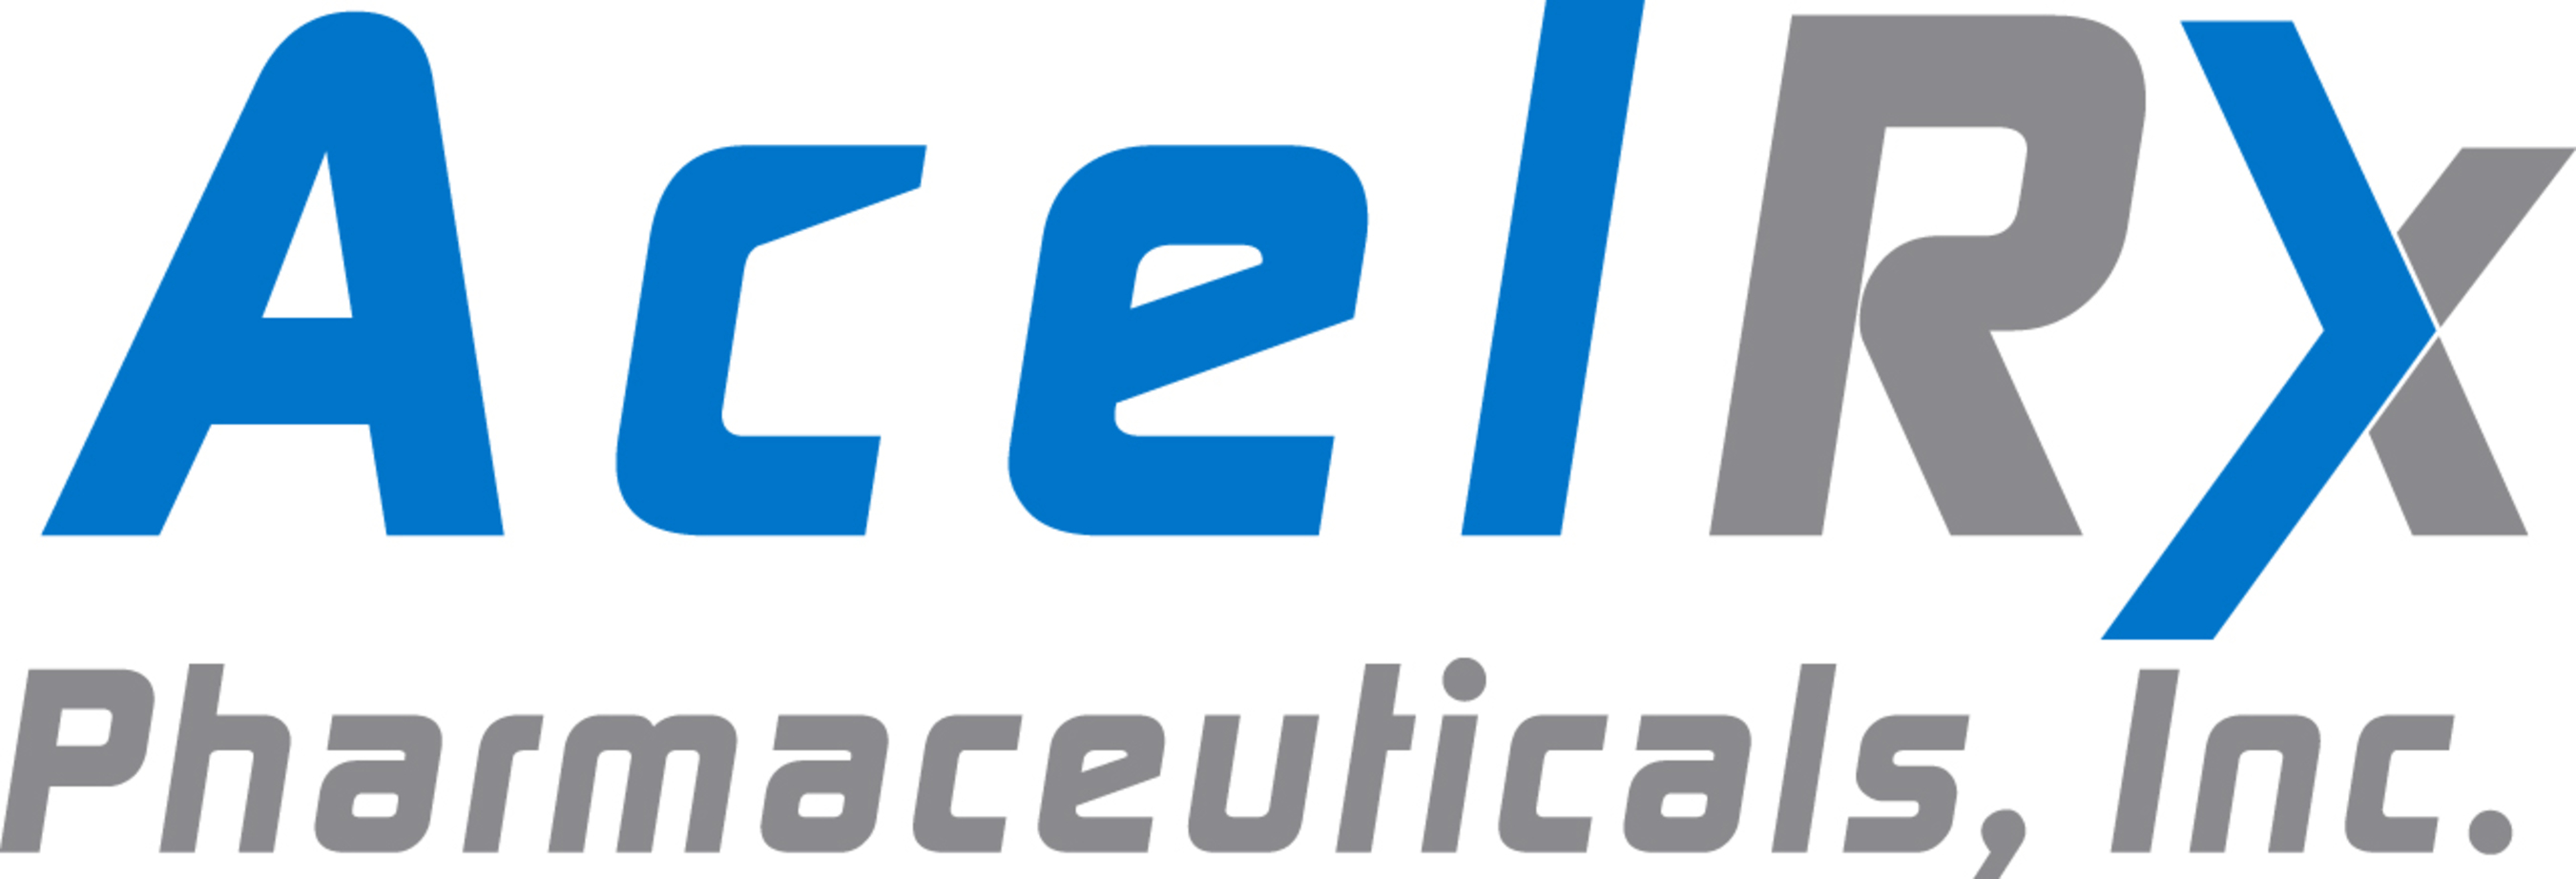 AcelRx logo